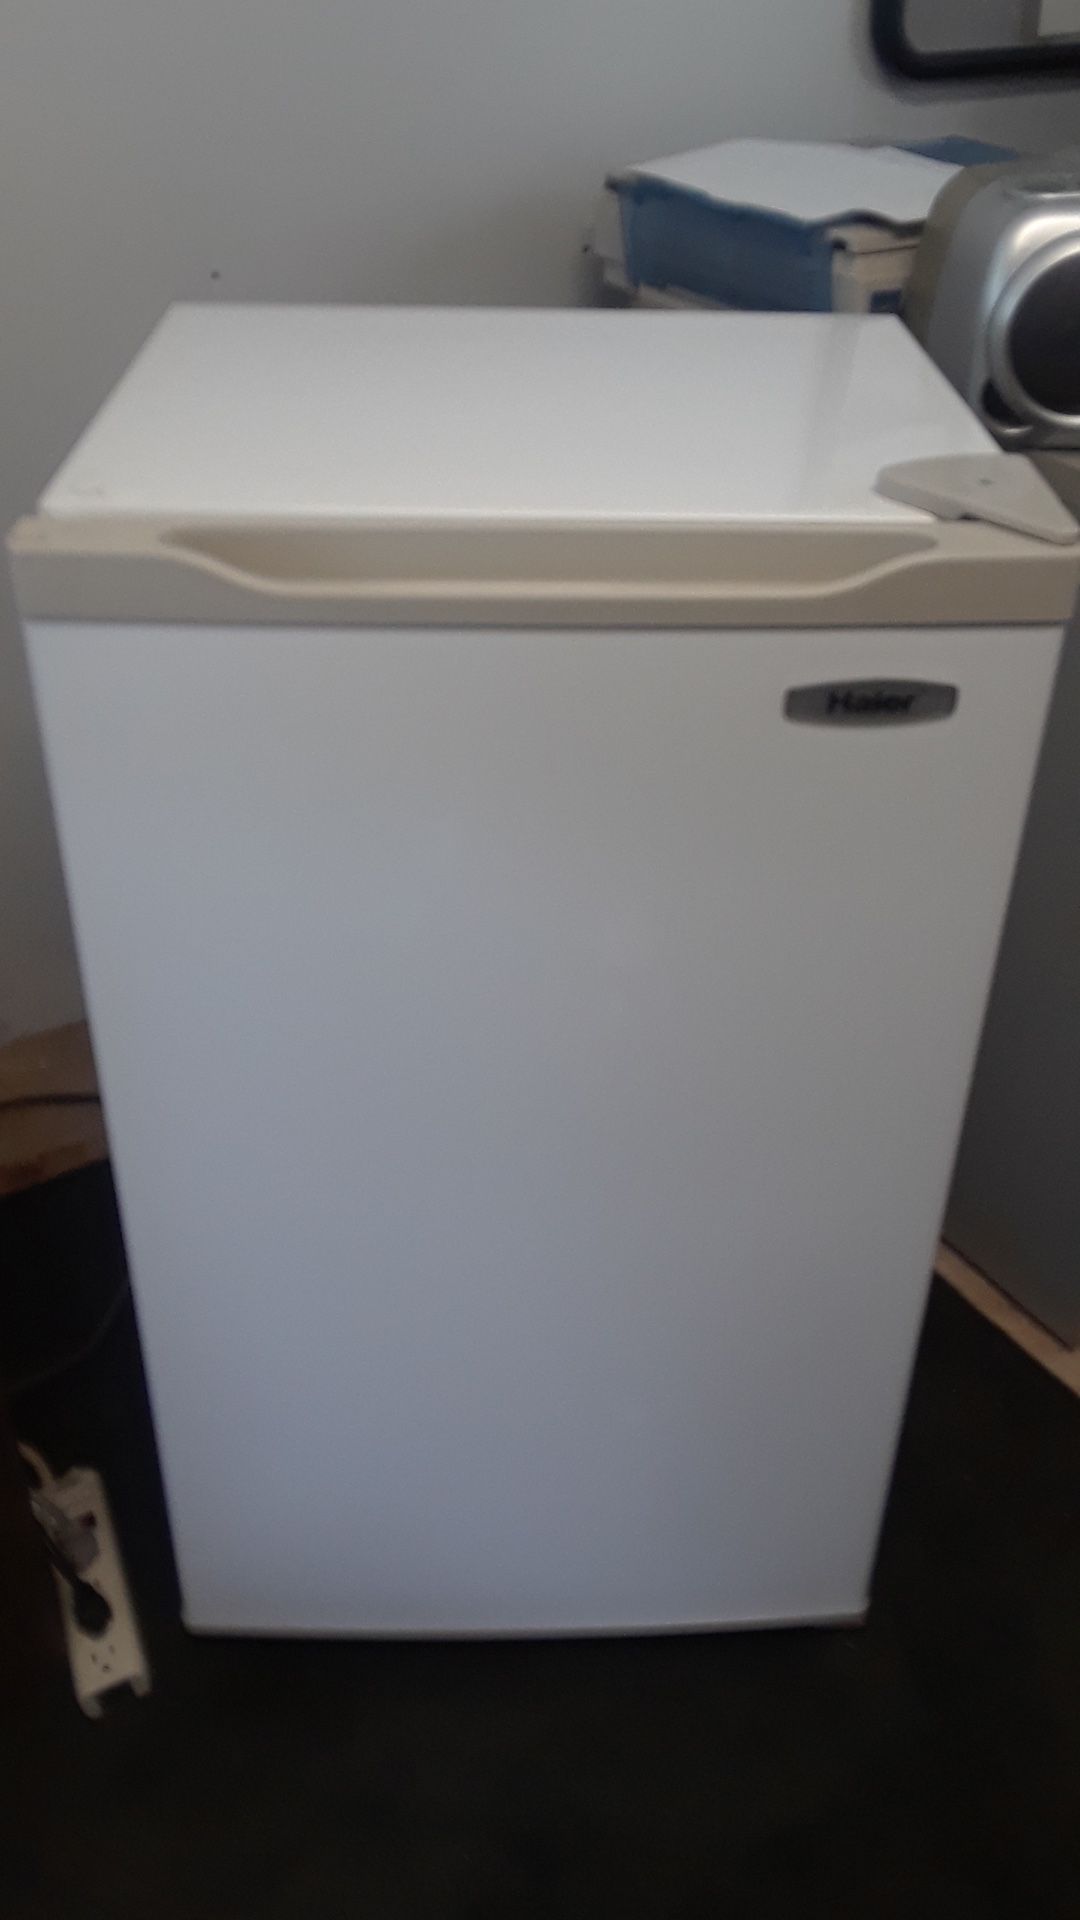 Haier mini refrigerator Size is depth 14inch, high 33 in. Width 20in.